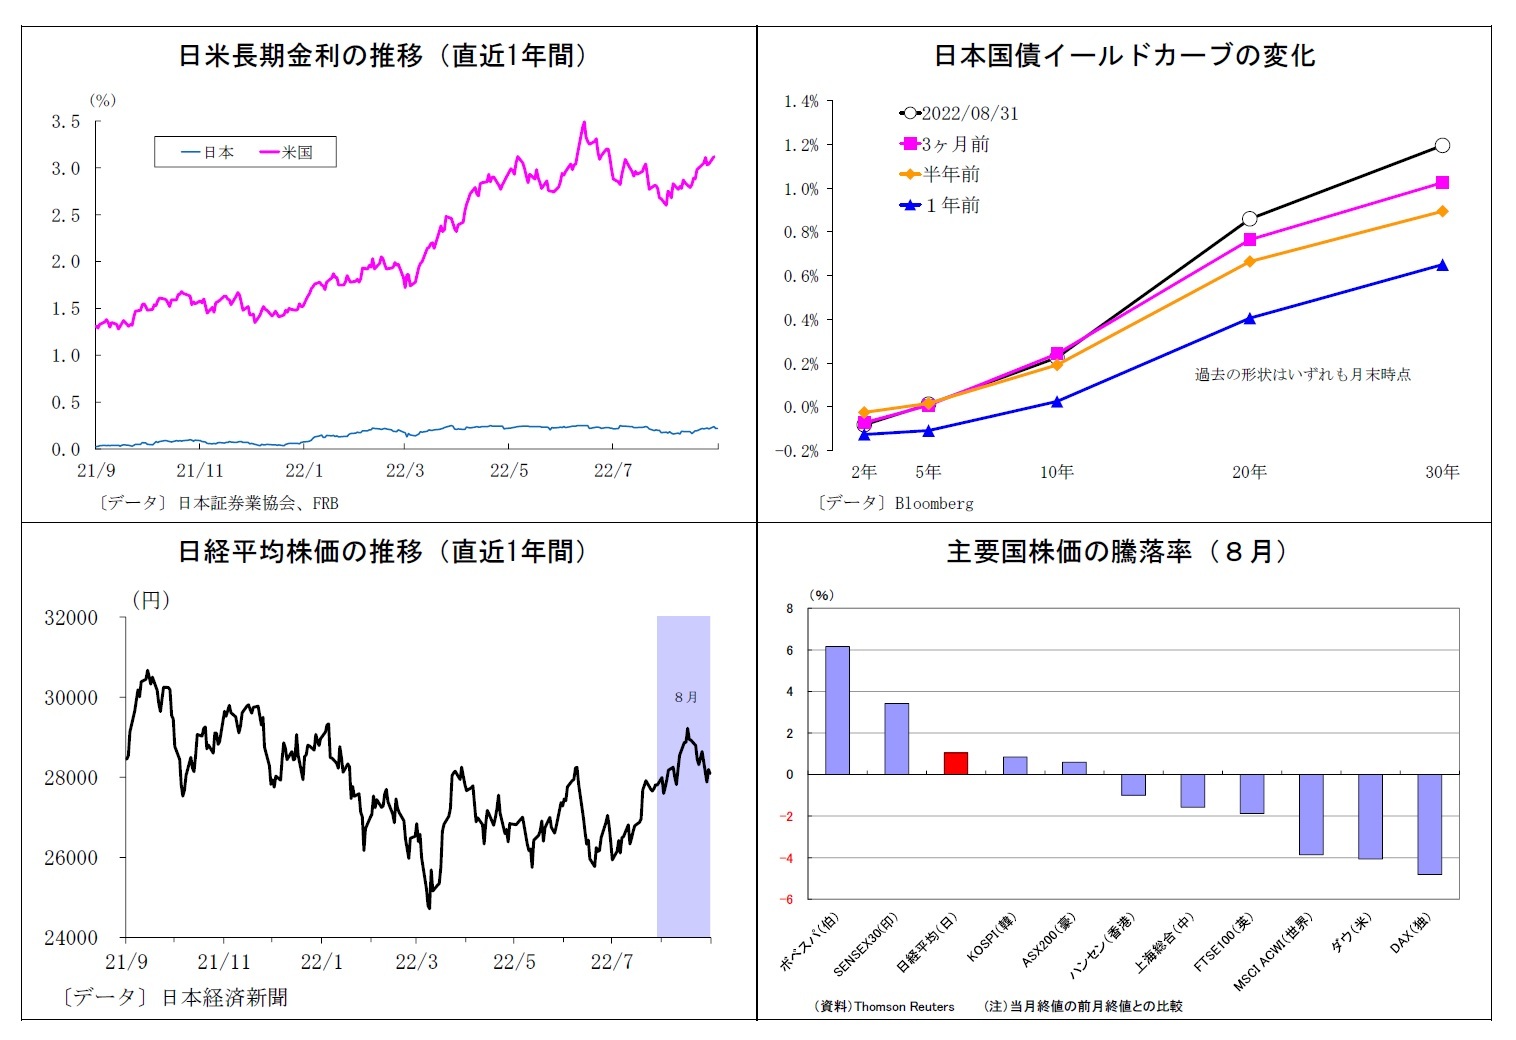 日米長期金利の推移（直近1年間）/日本国債イールドカーブの変化/日経平均株価の推移（直近1年間）/主要国株価の騰落率（８月）